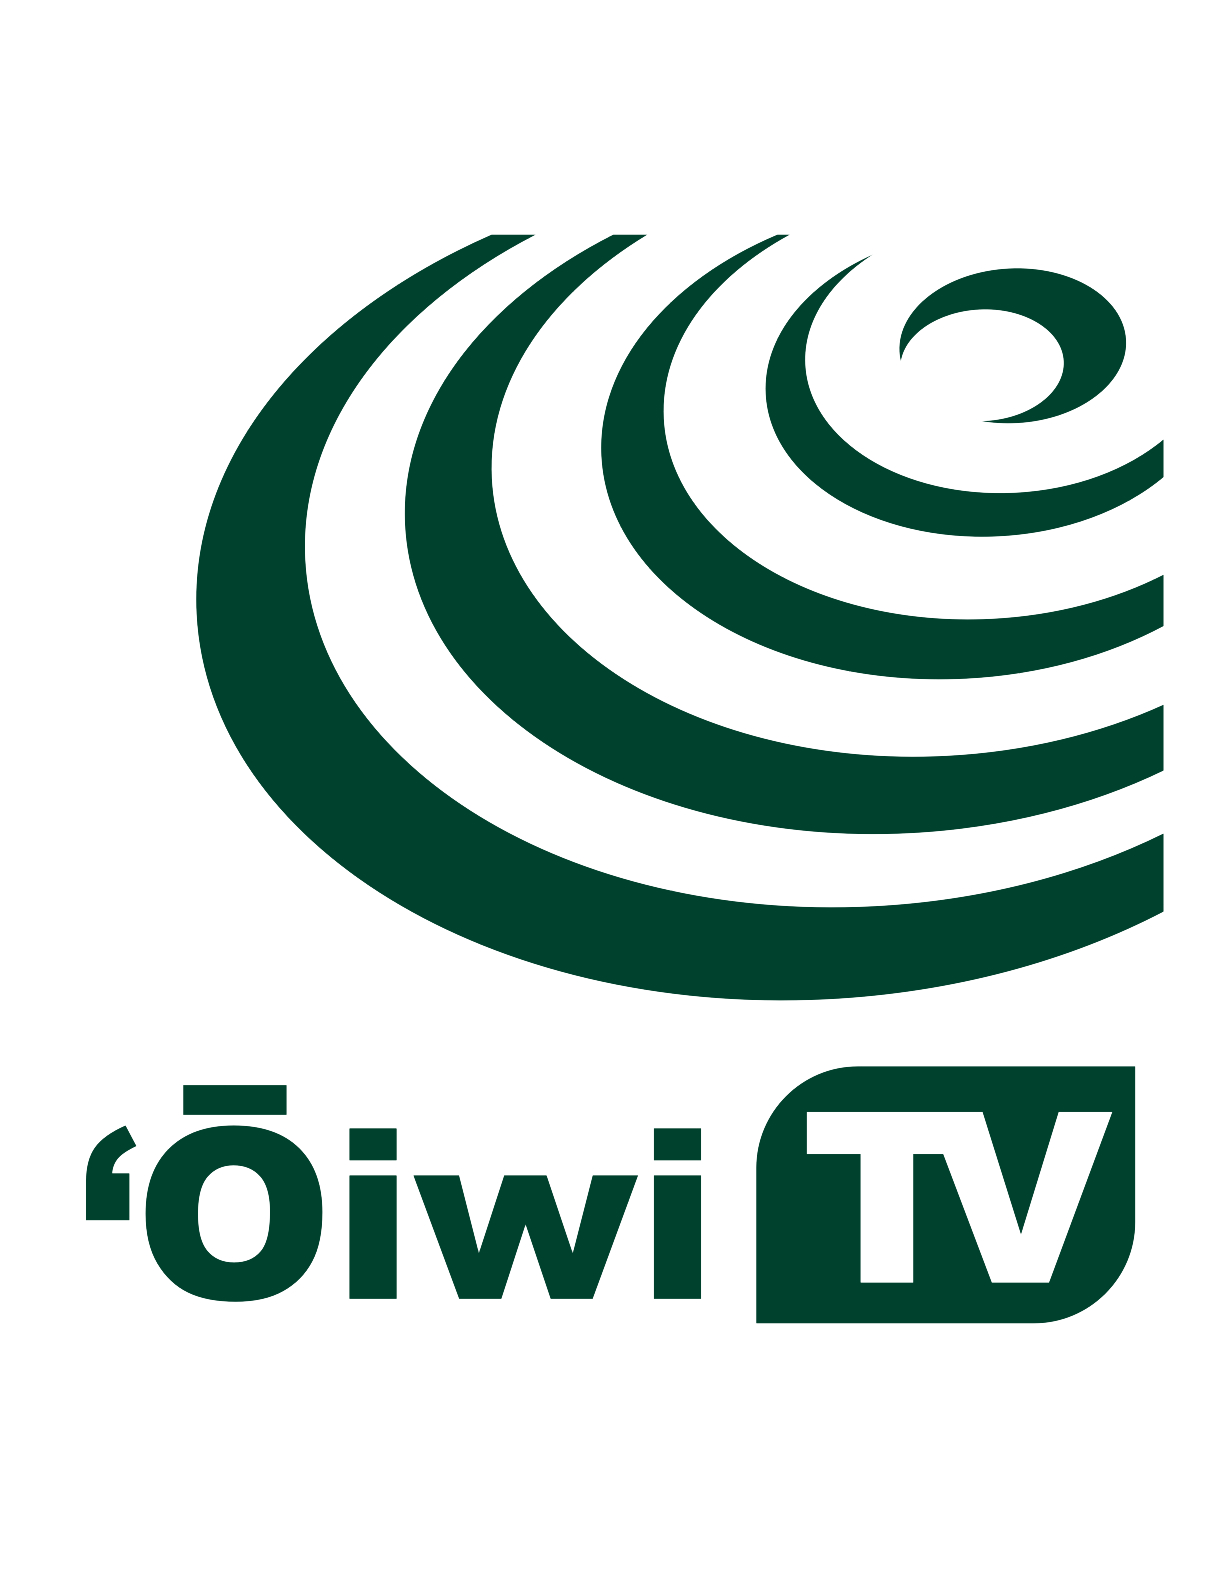 OiwiTV_Logo_Green.png